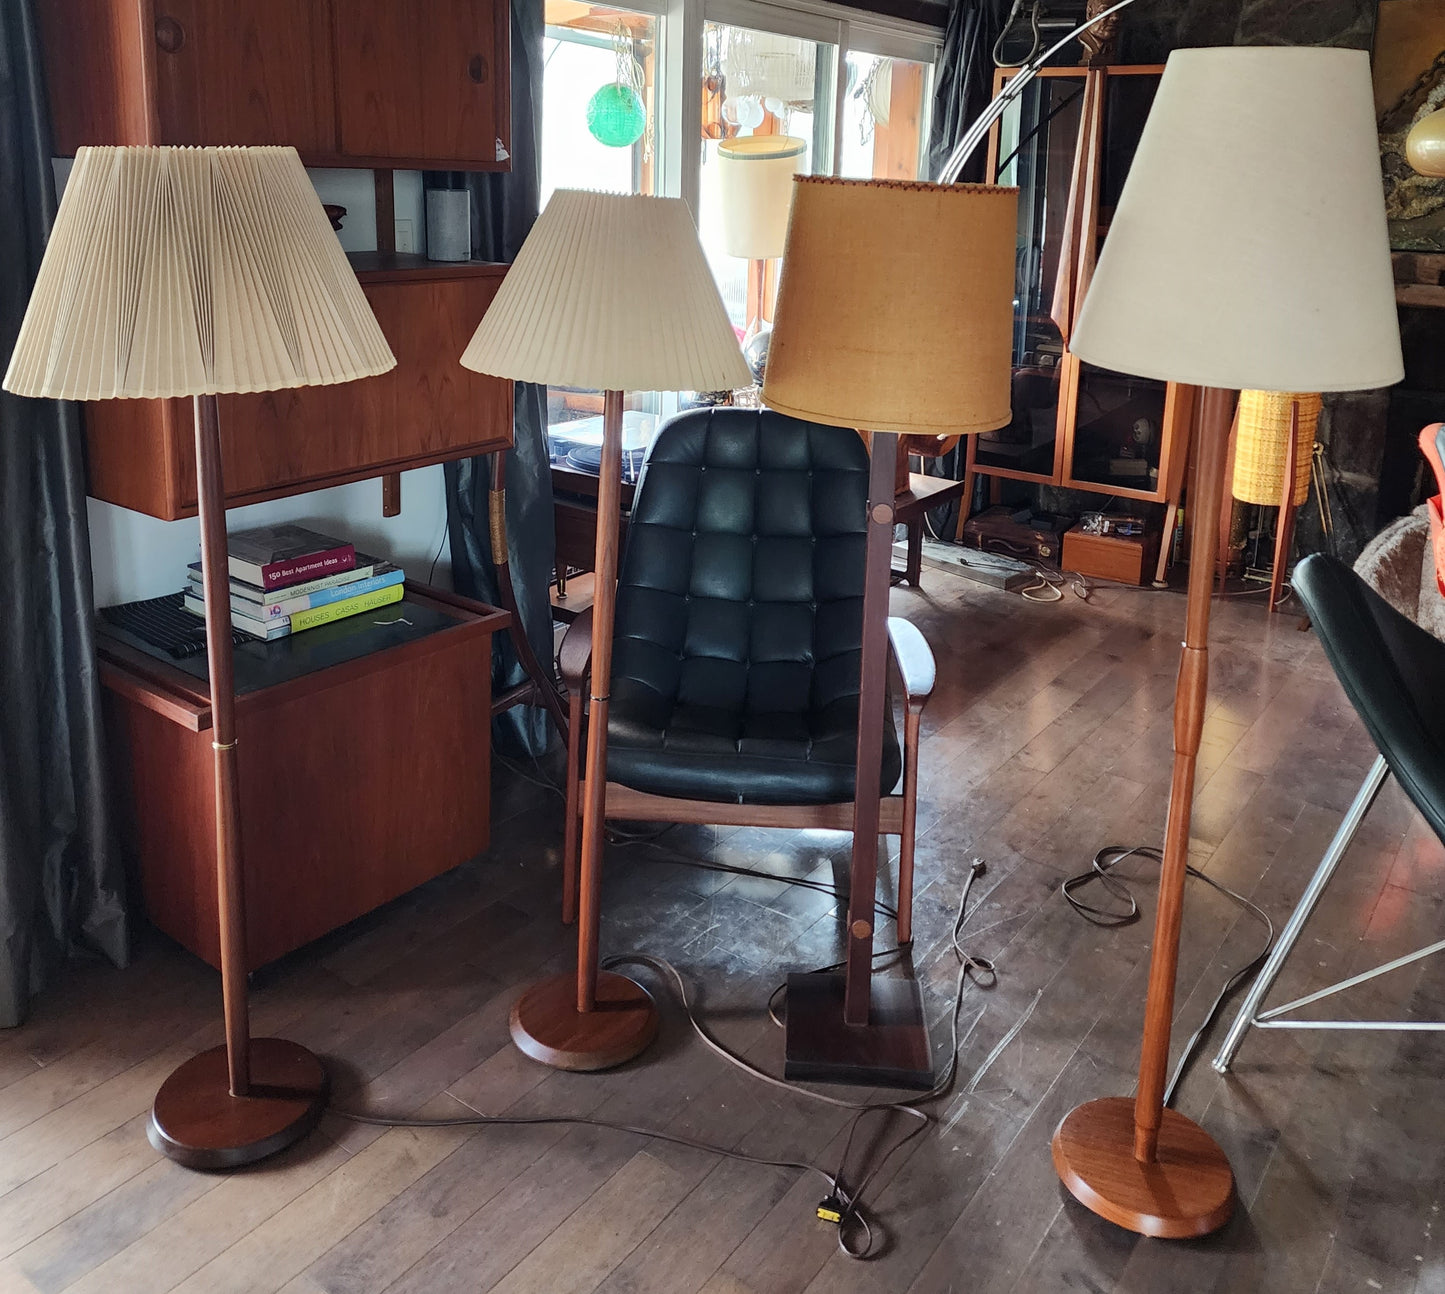 Mid Century Modern Solid Teak Floor Lamp, H 58" (including shade)